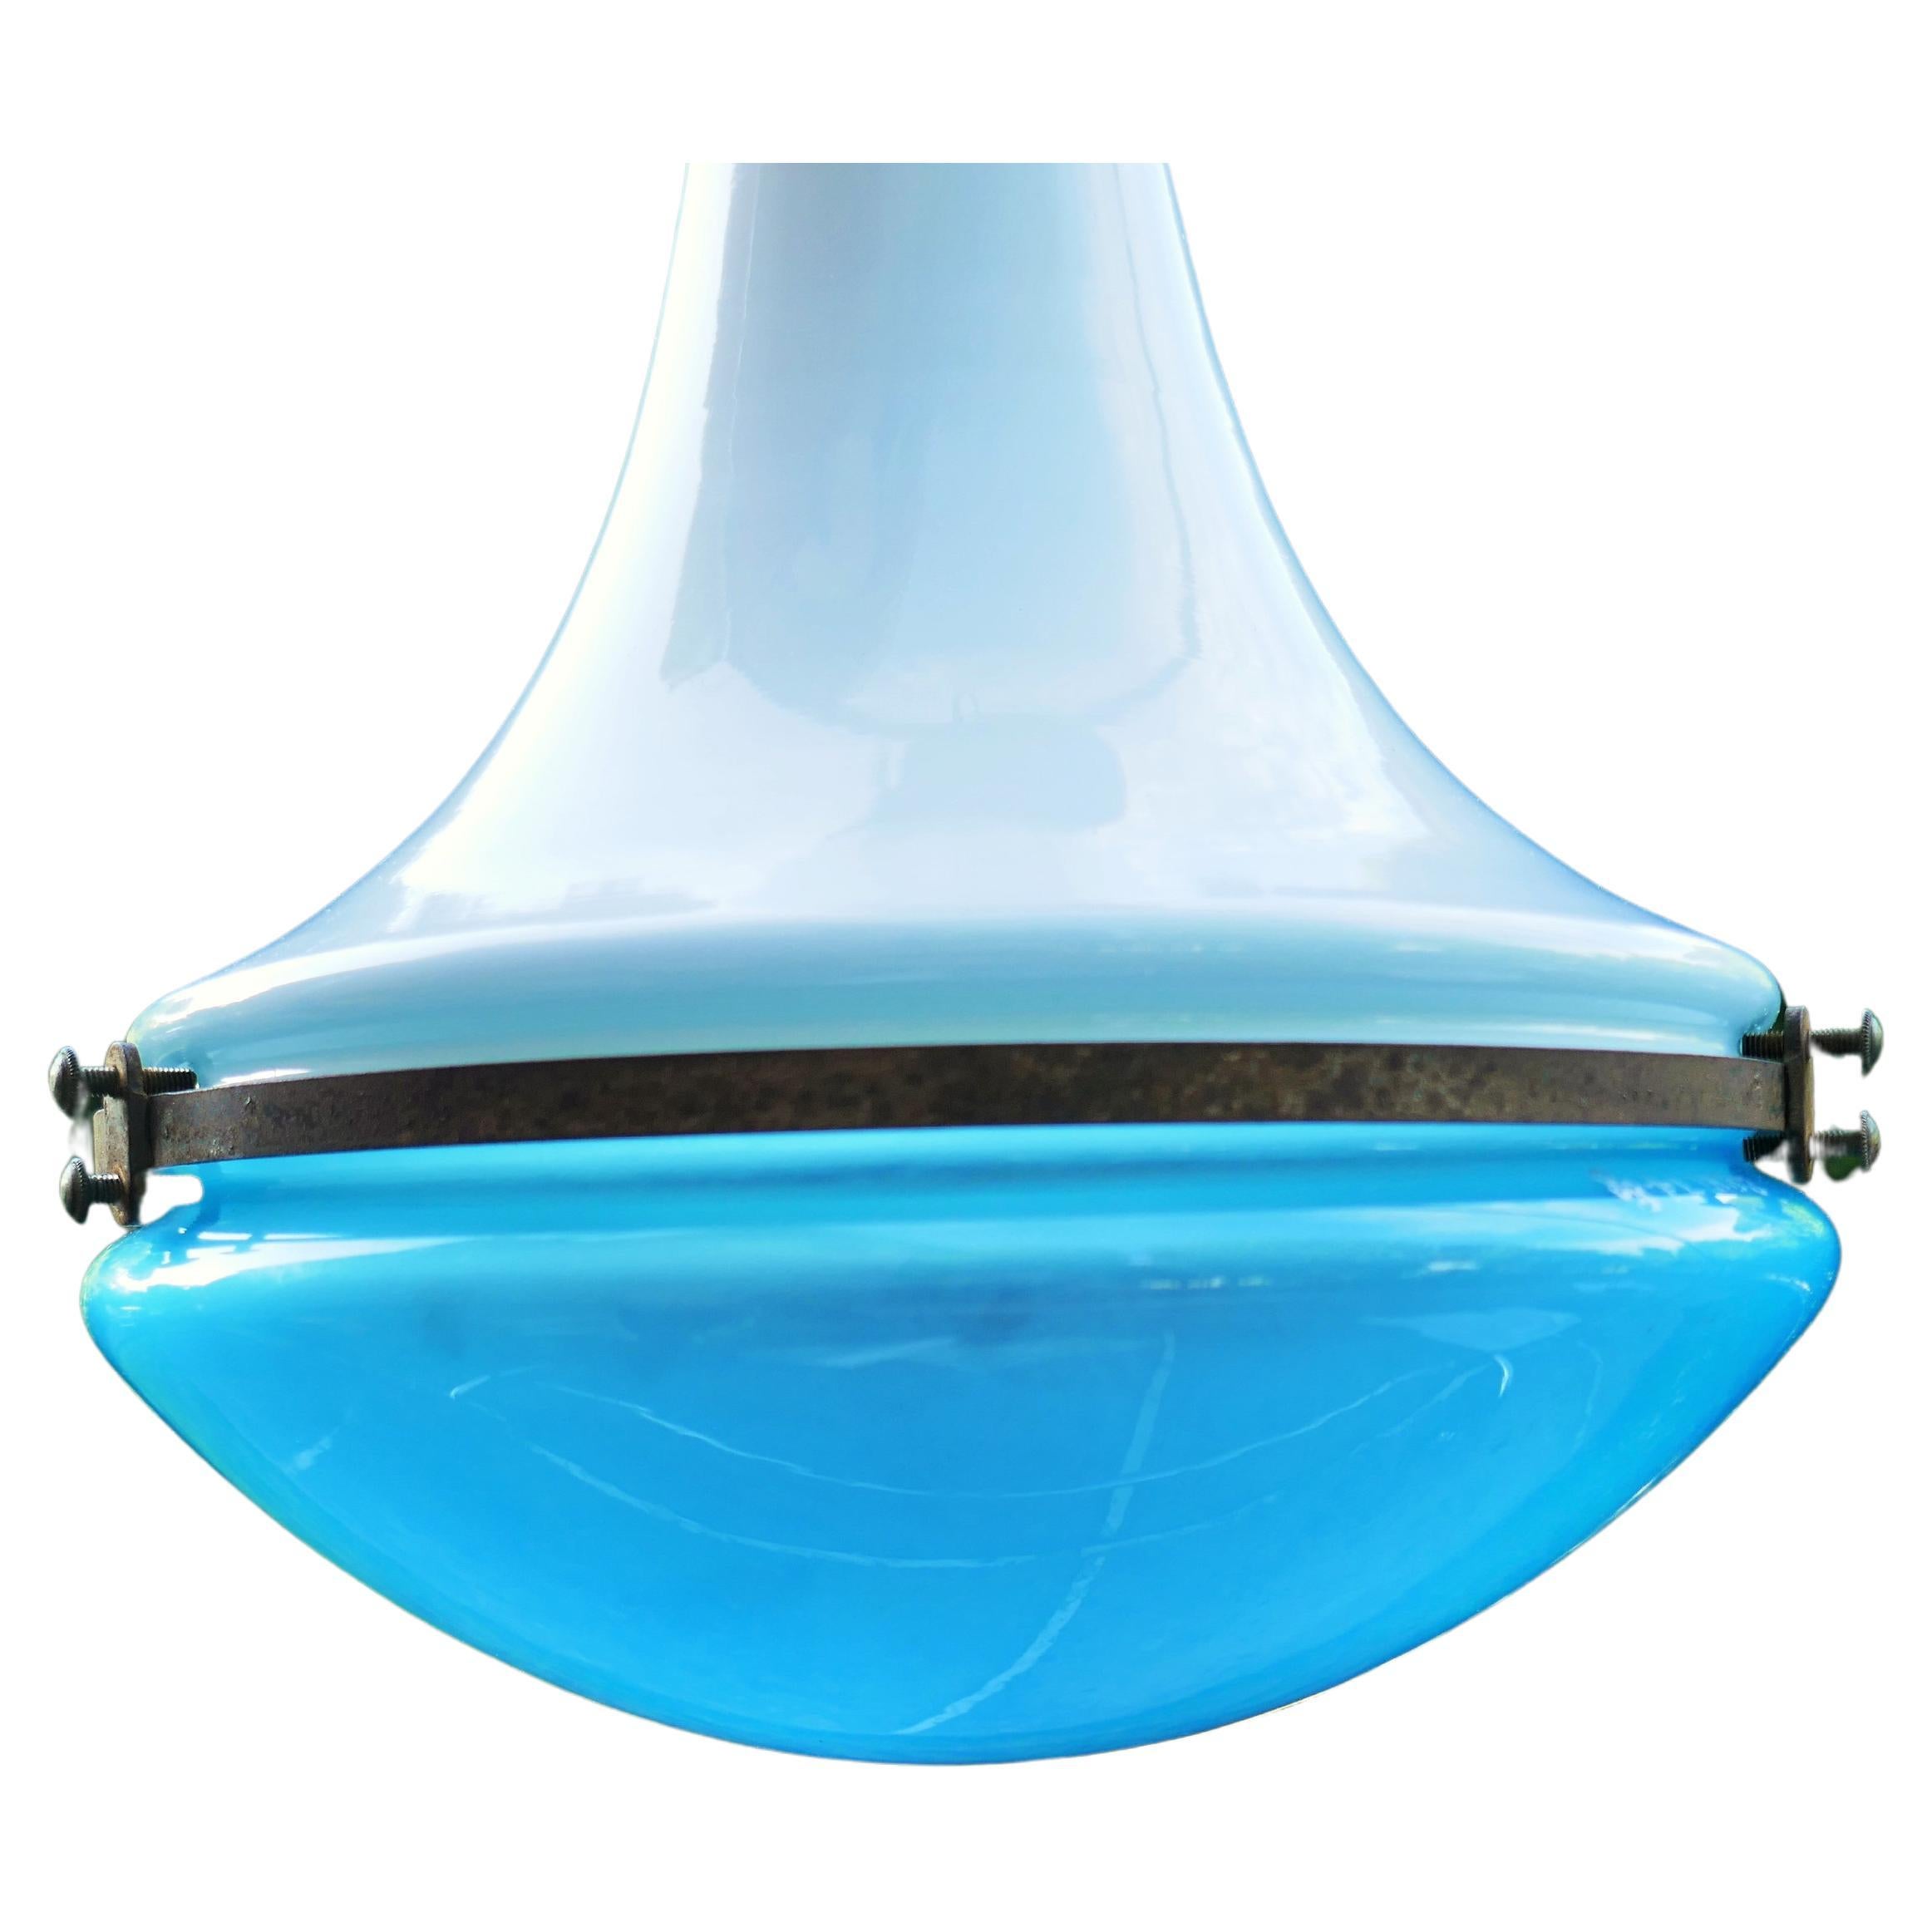 Early 20th Century Lampada a sospensione Luzette di Peter Behrens per Siemens - numerata colore blu in vendita